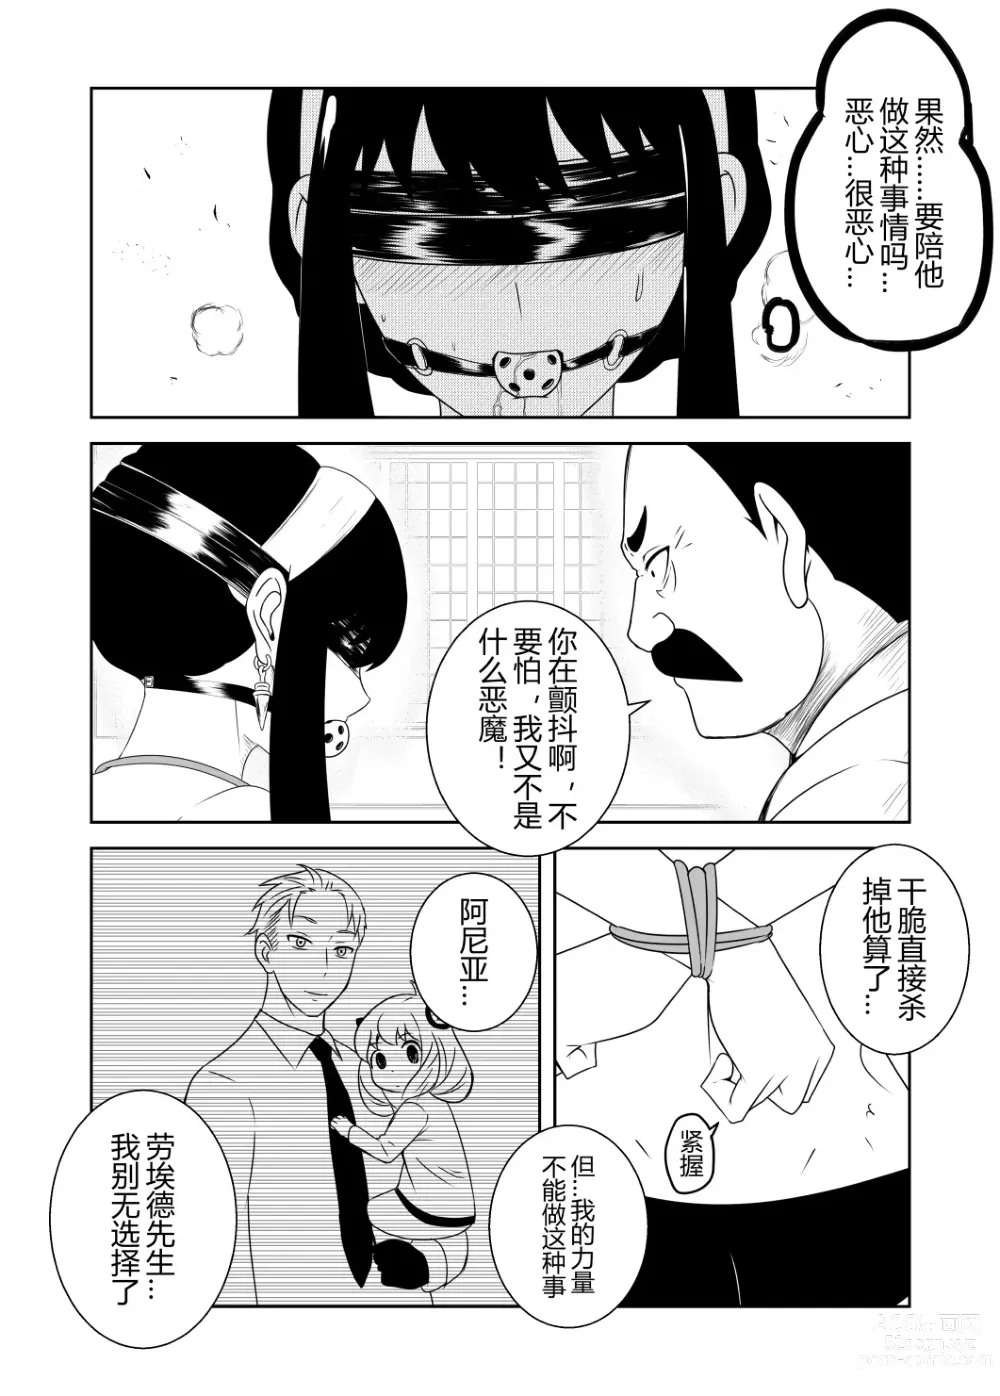 Page 7 of doujinshi 间谍过家家